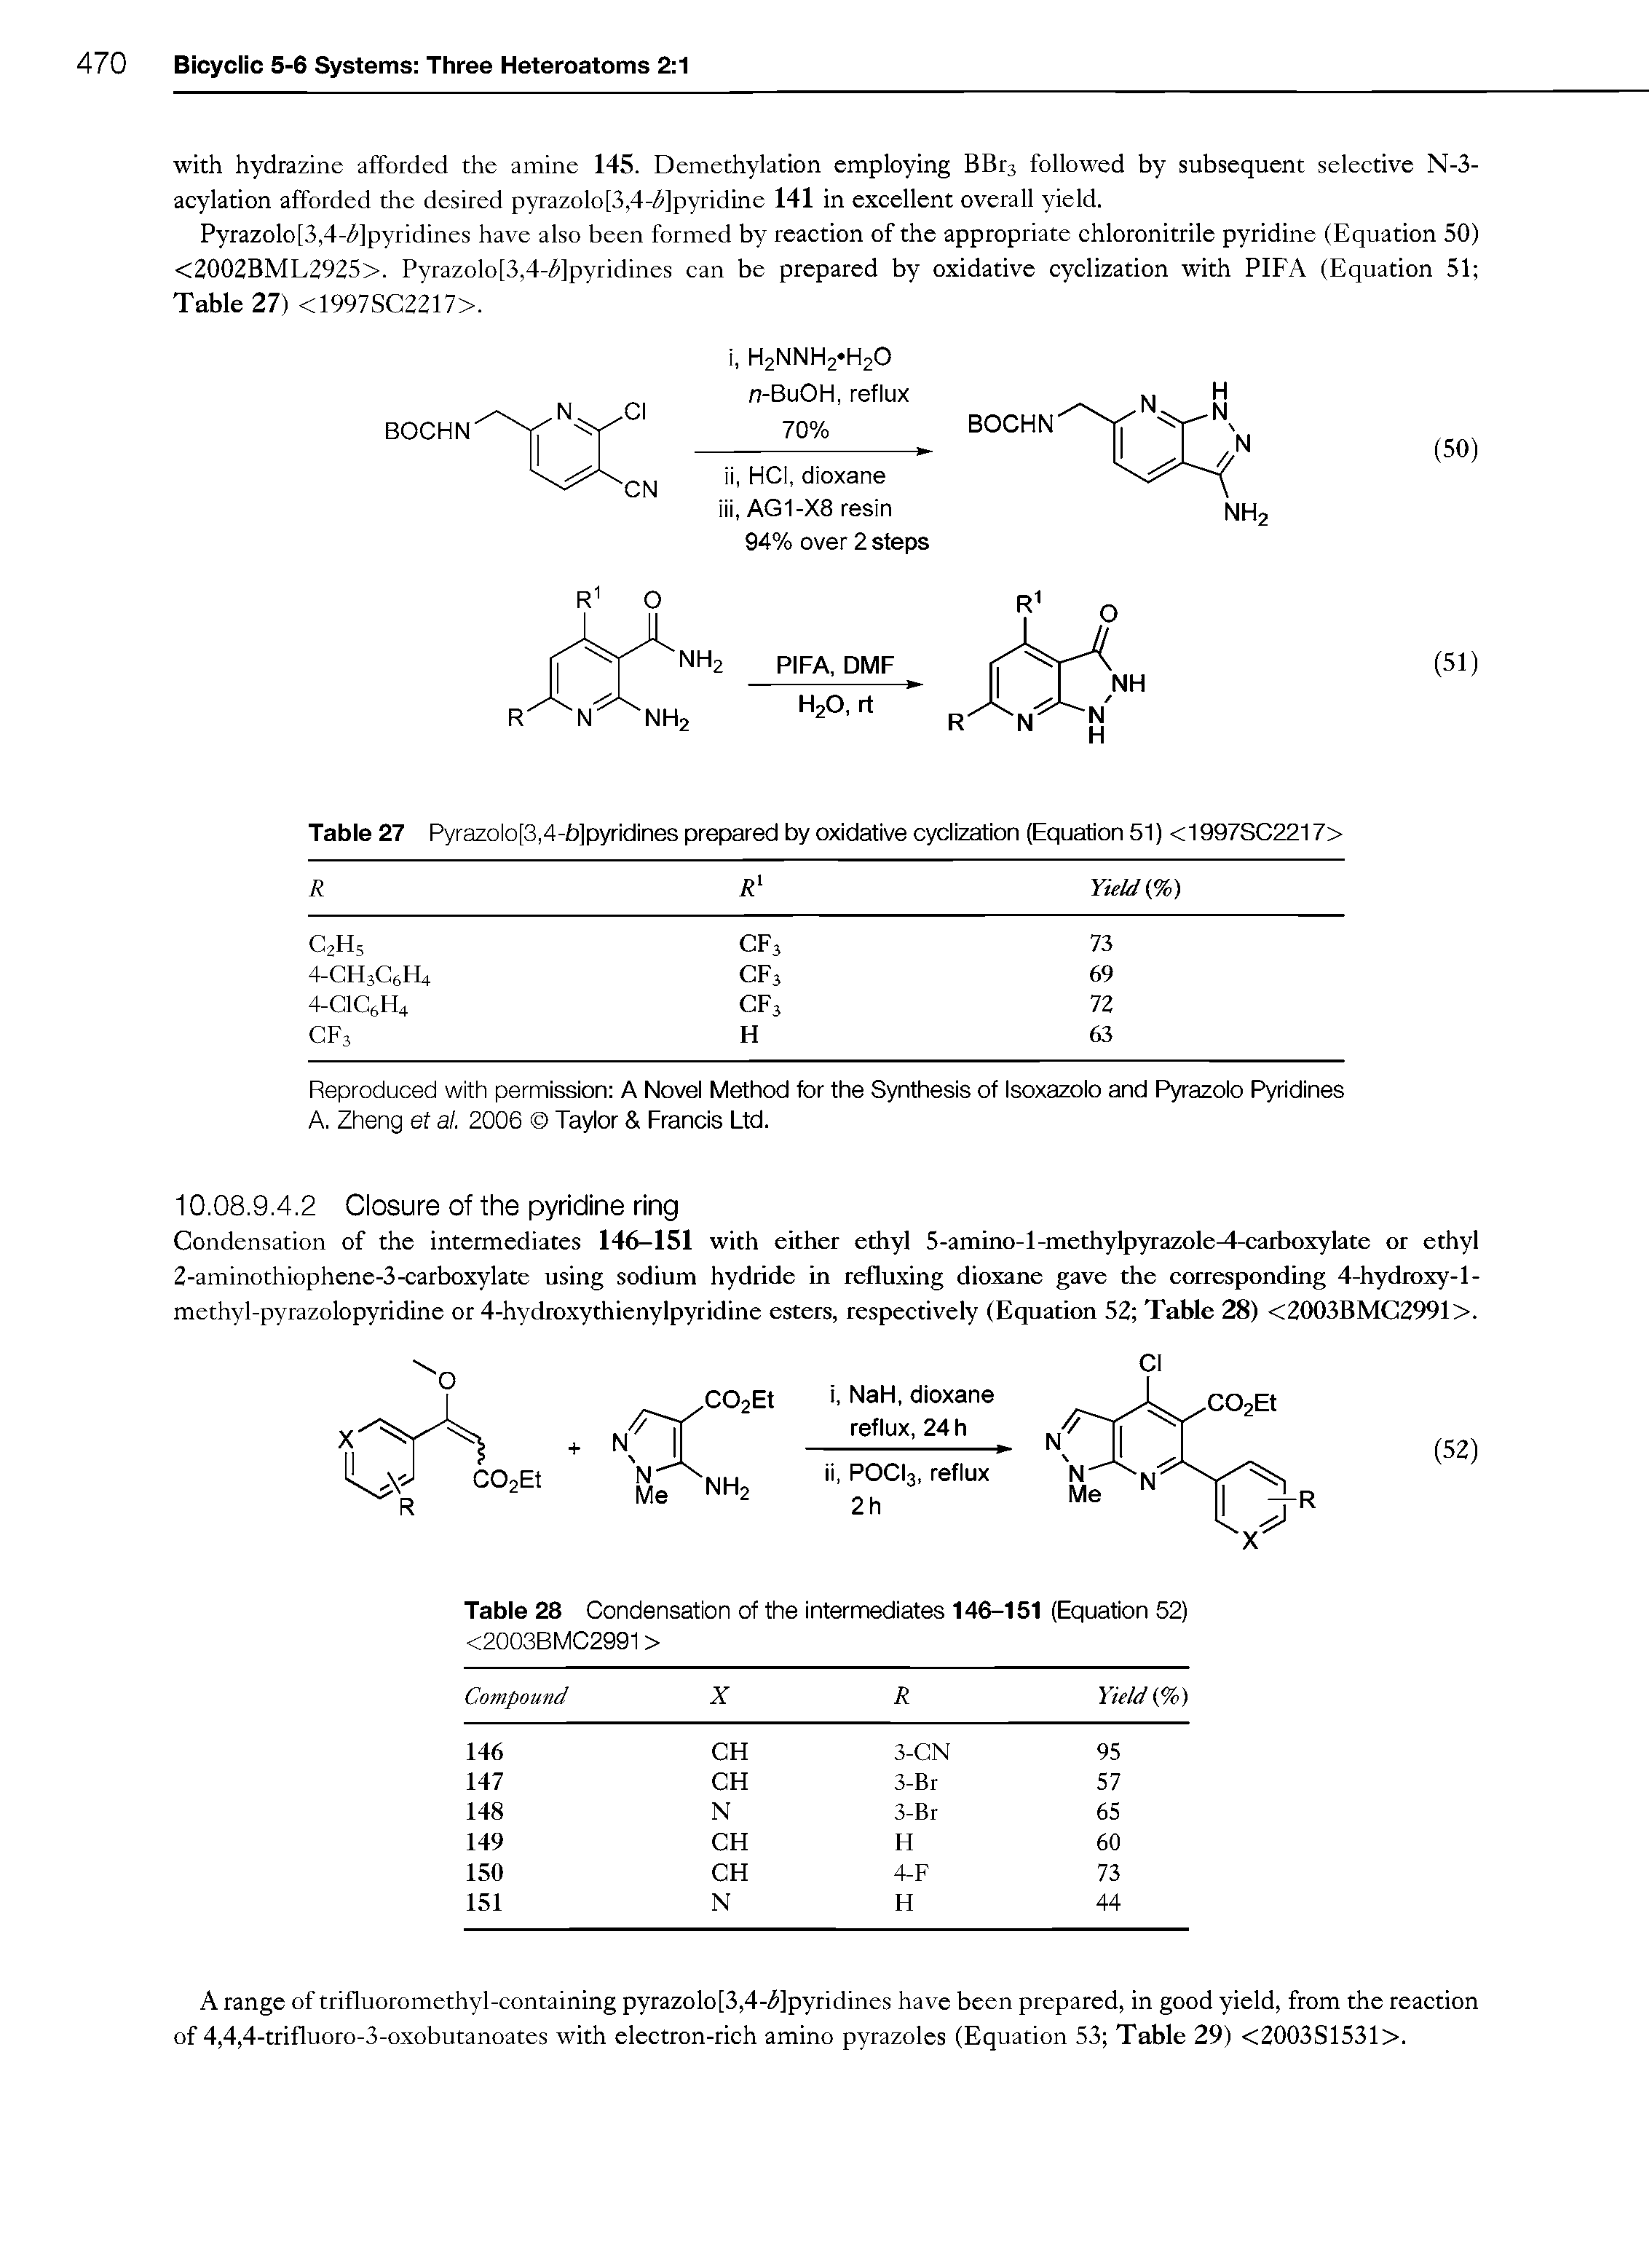 Table 27 Pyrazolo[3,4-b]pyridines prepared by oxidative cyclization (Equation 51) <1997SC2217>...